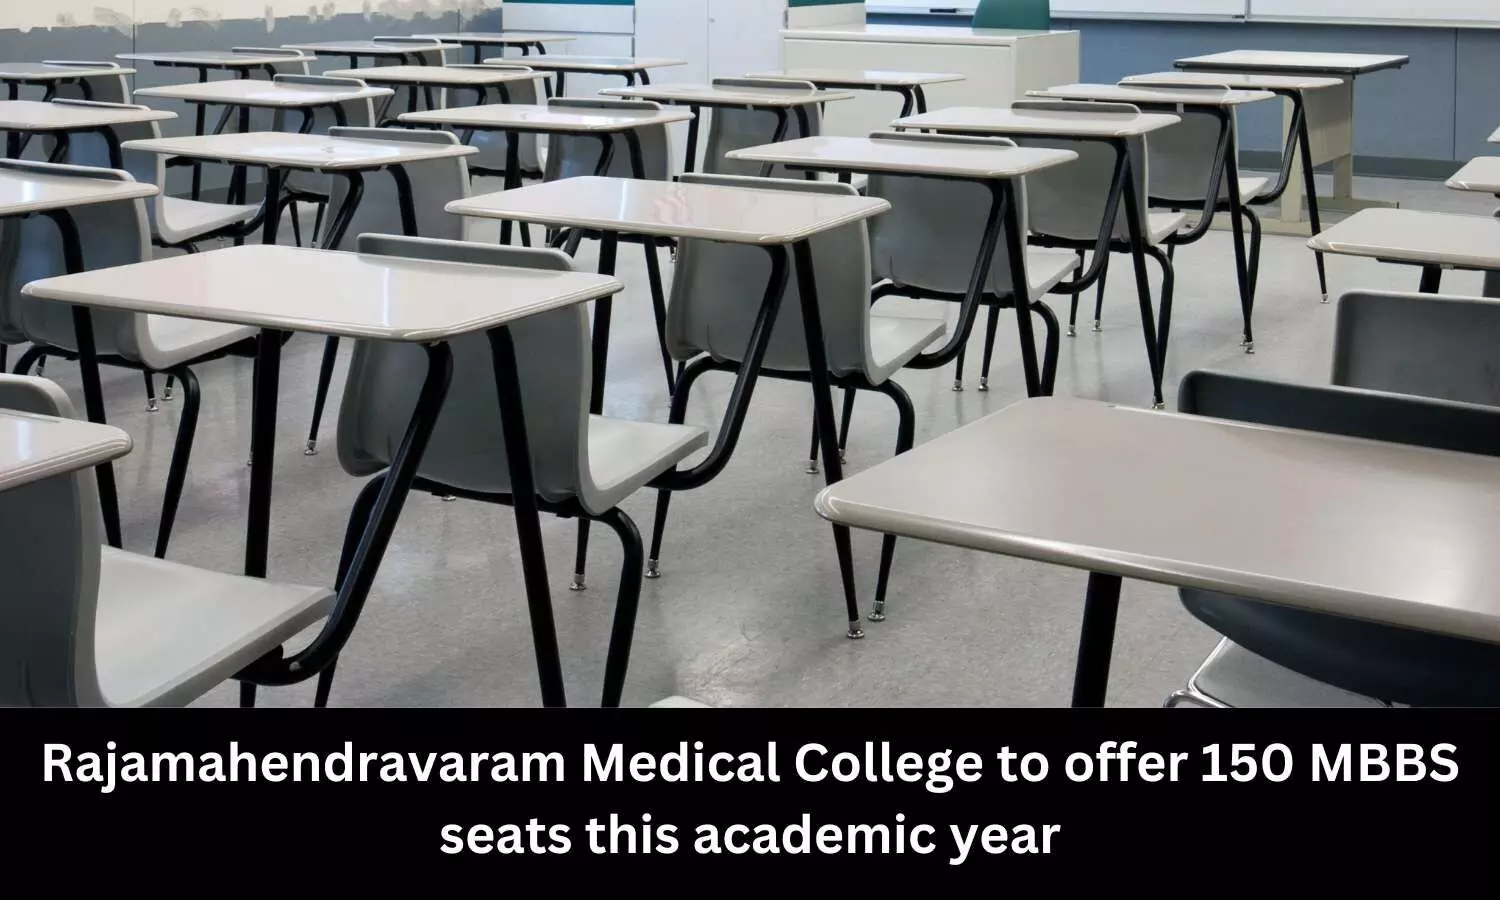 Rajamahendravaram Medical College to offer 150 MBBS seats this academic year